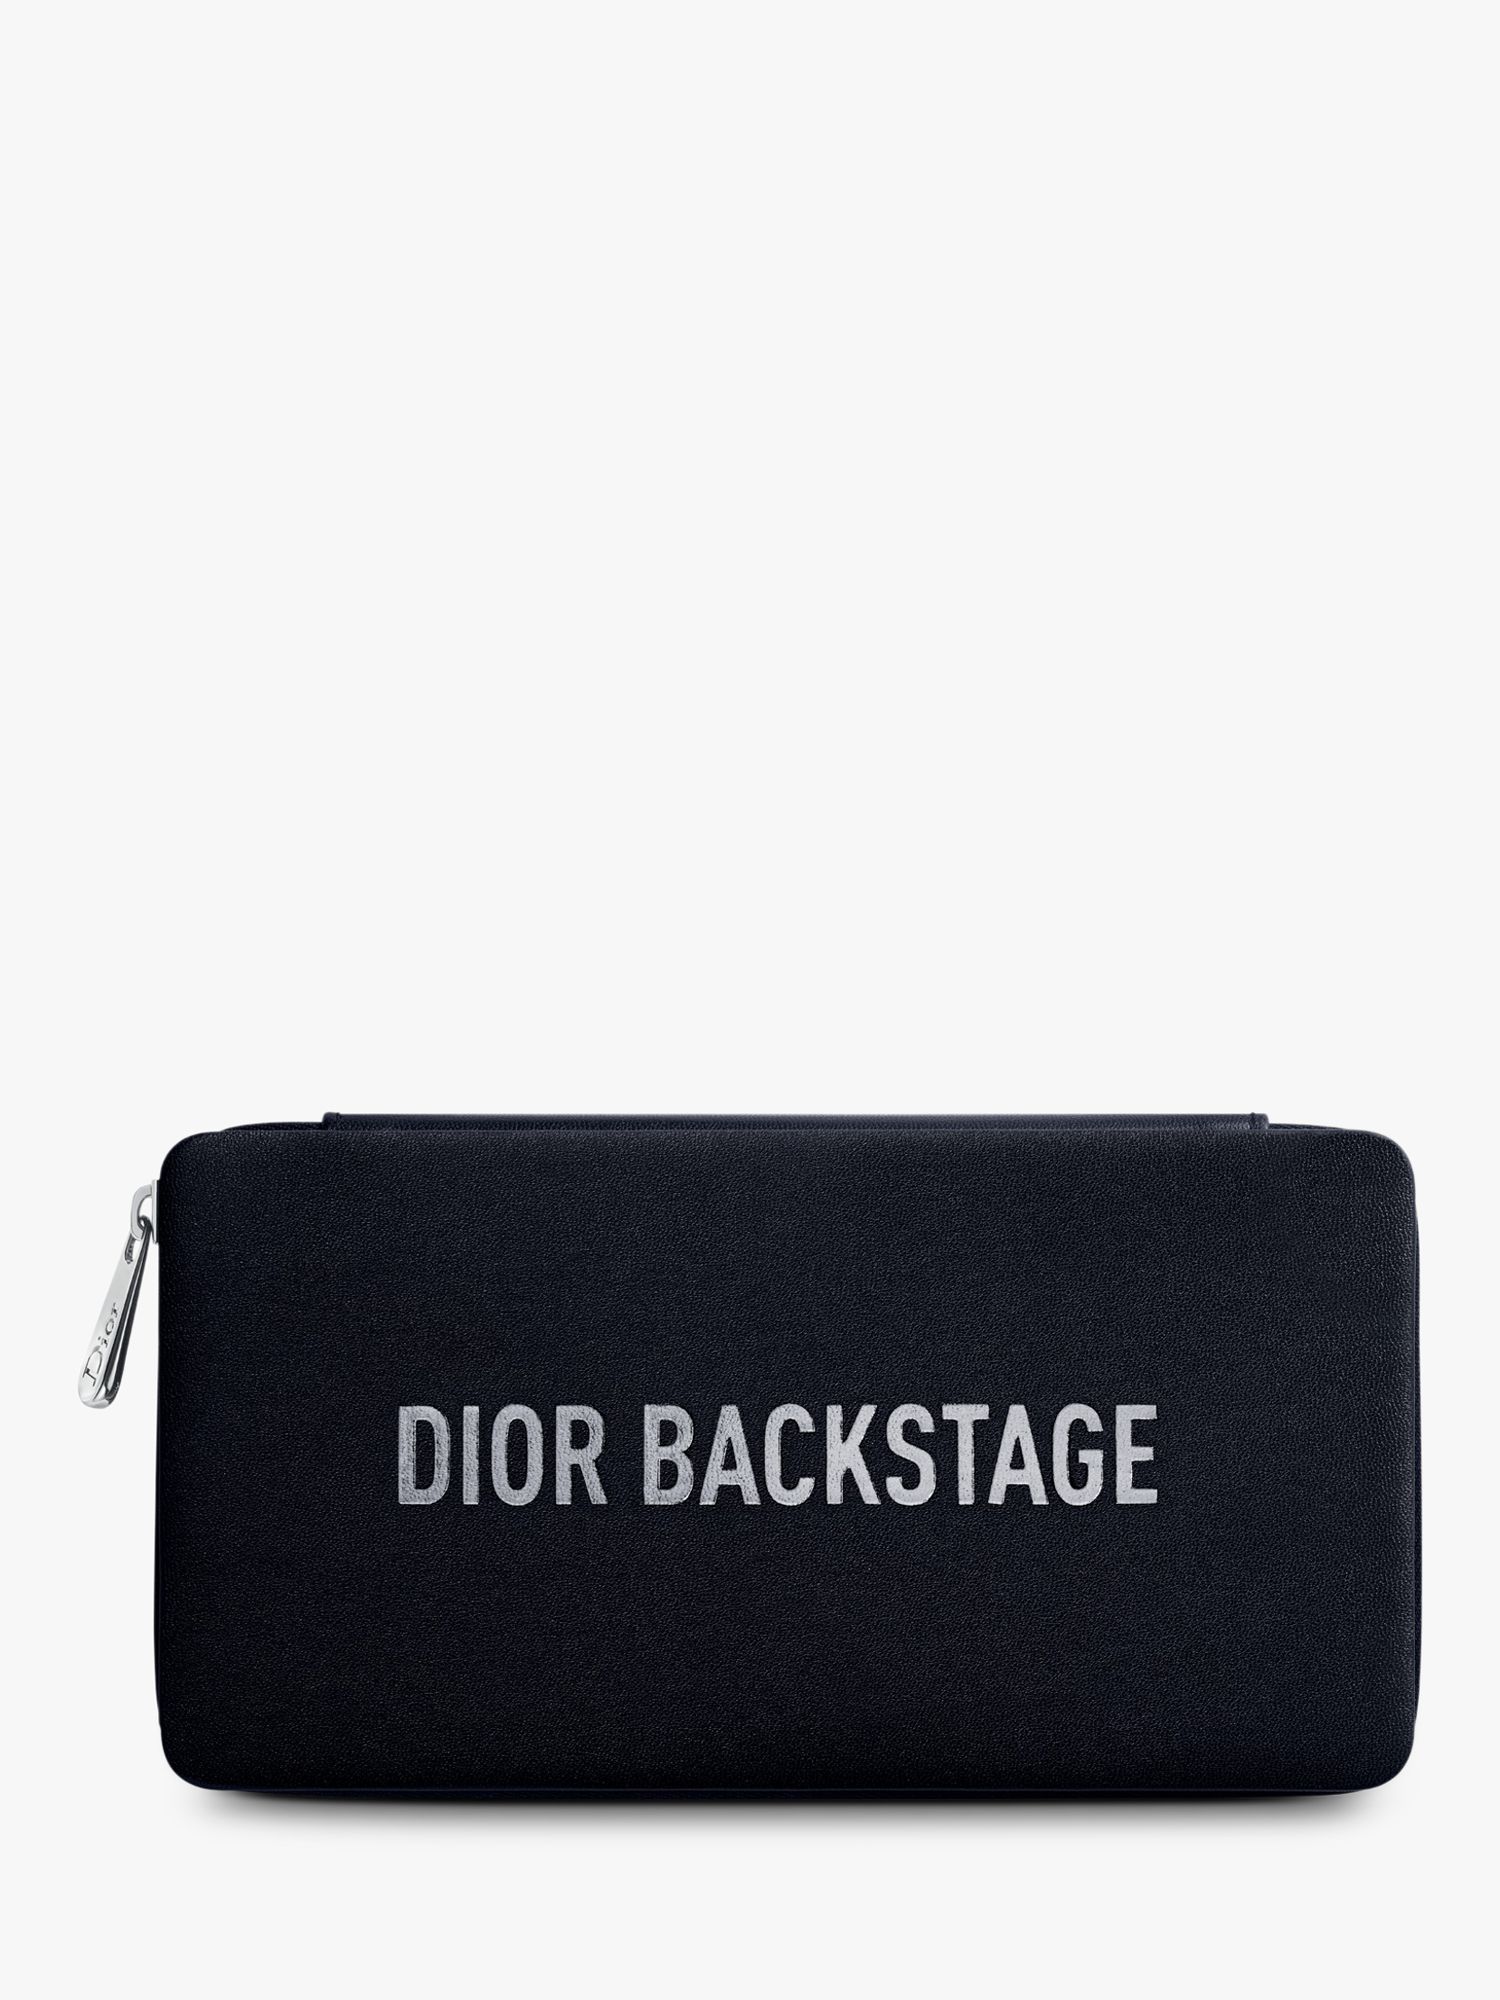 Dior Backstage Pouch Brush Set at John 